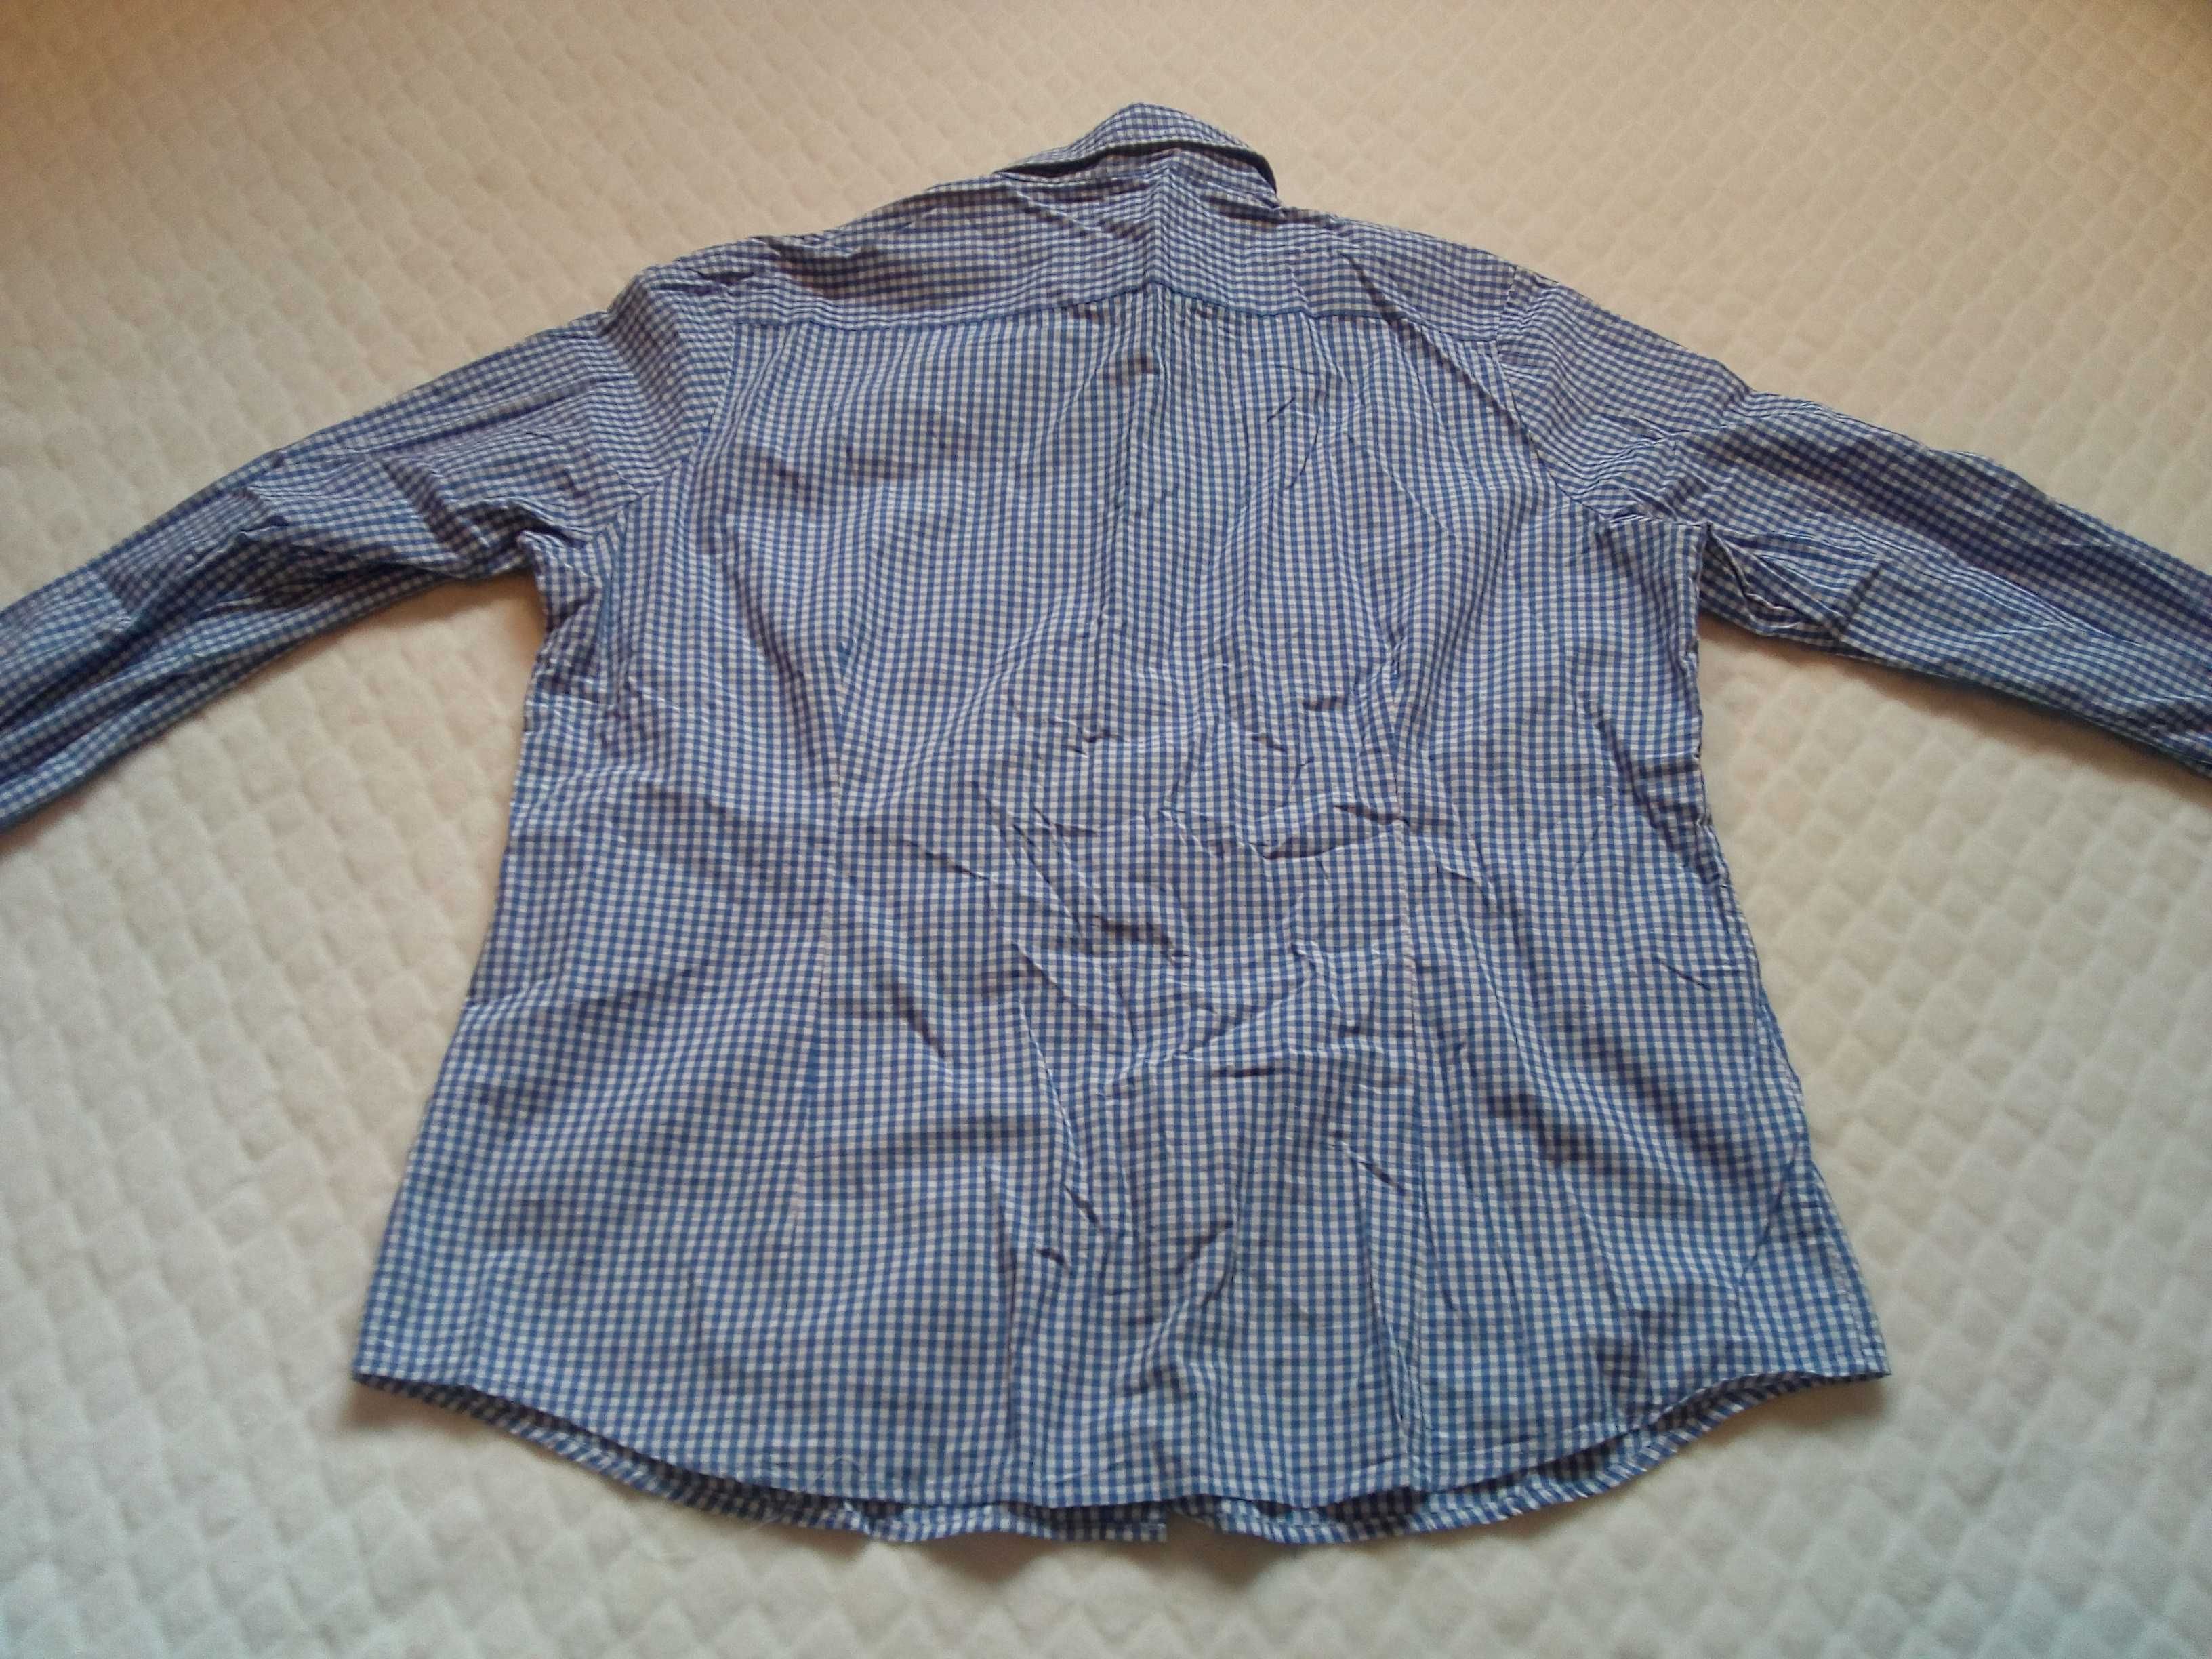 Koszula Damska, niebieska kratka - brookshire (44) (Odzież)